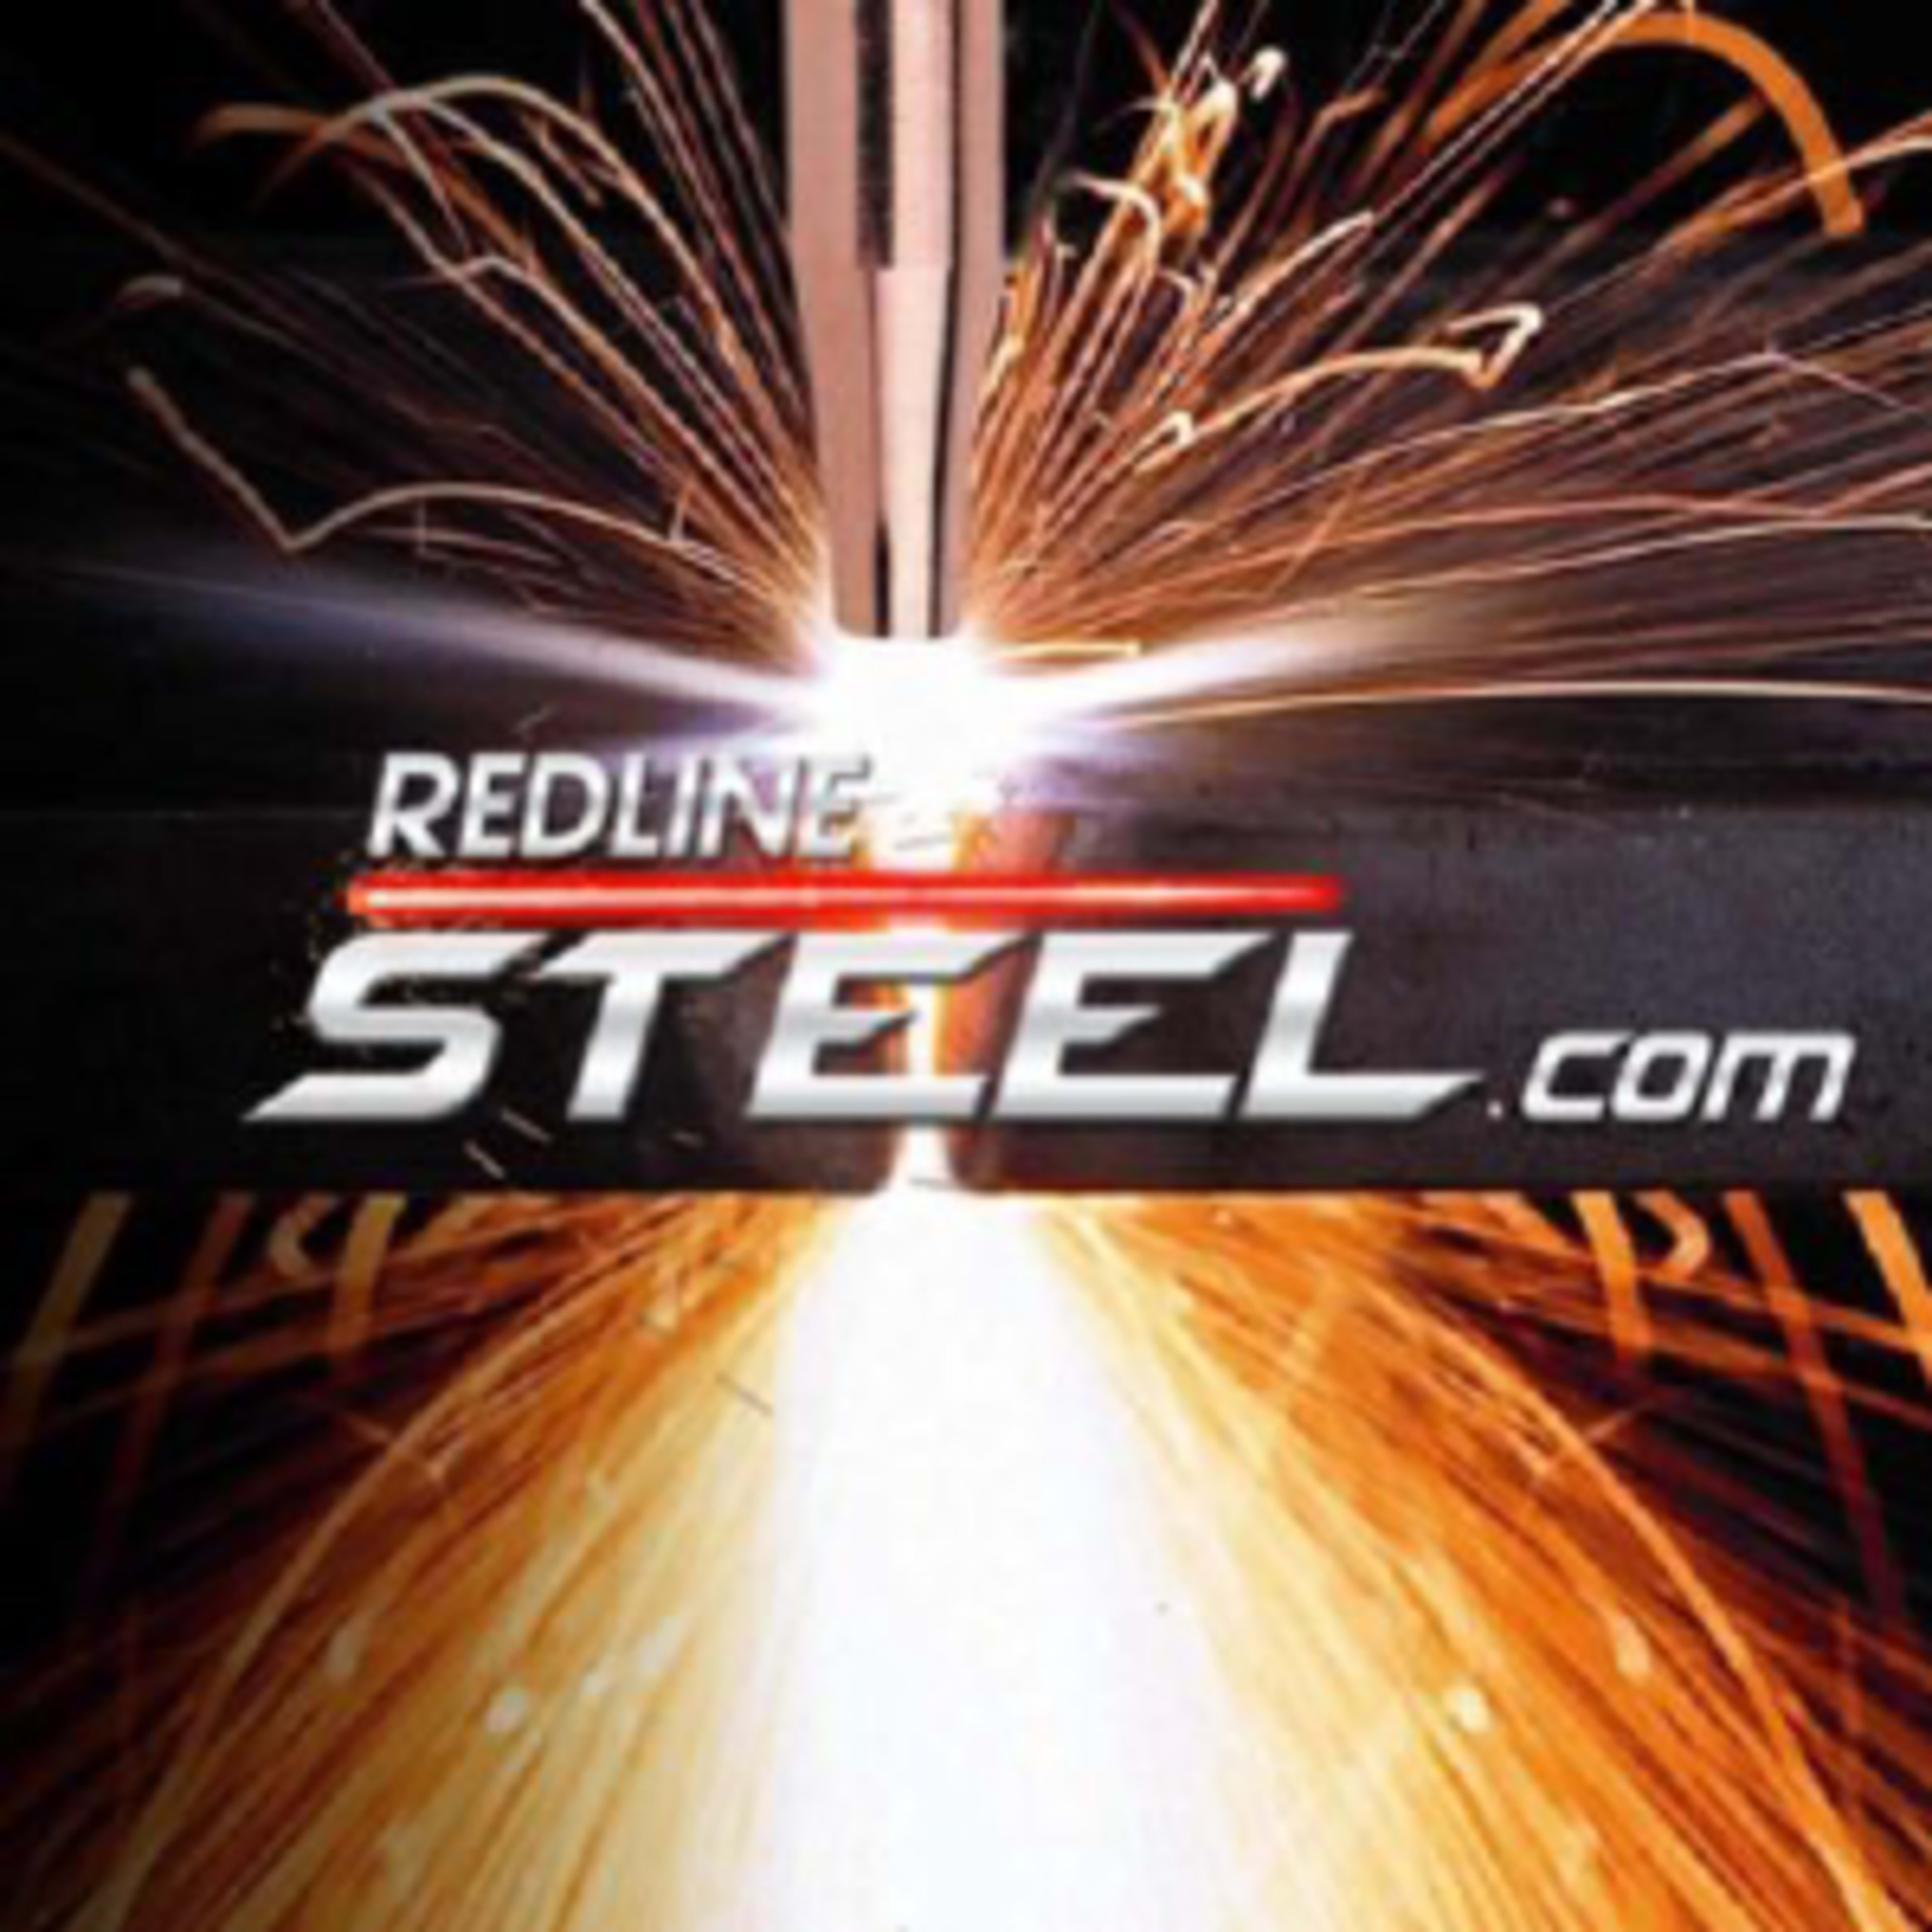 Redline SteelCode